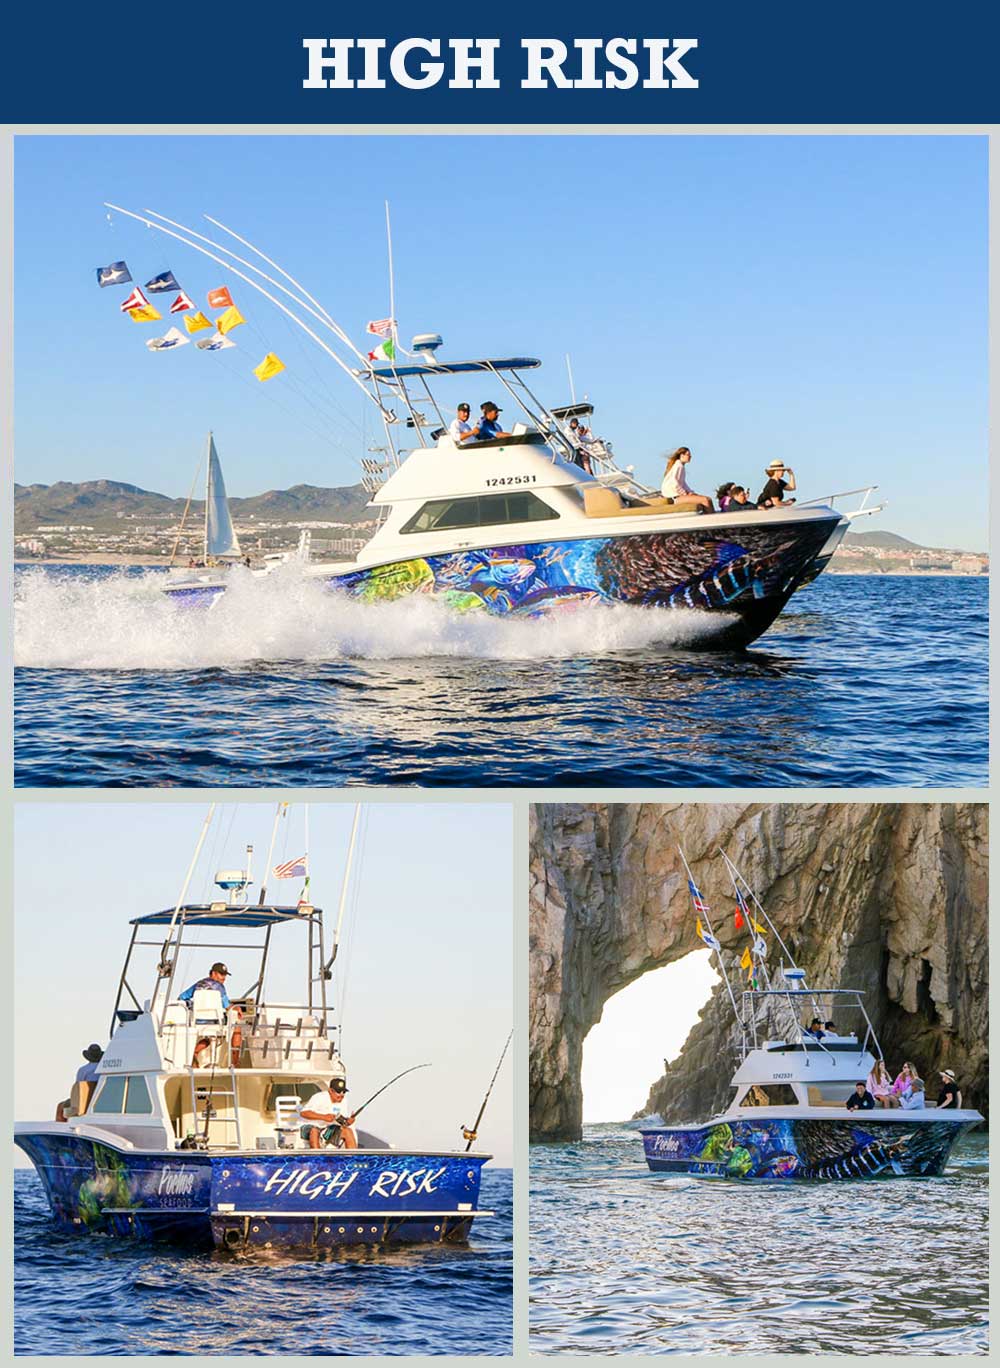 Cabo charter fishing boat, High Risk, Pochos